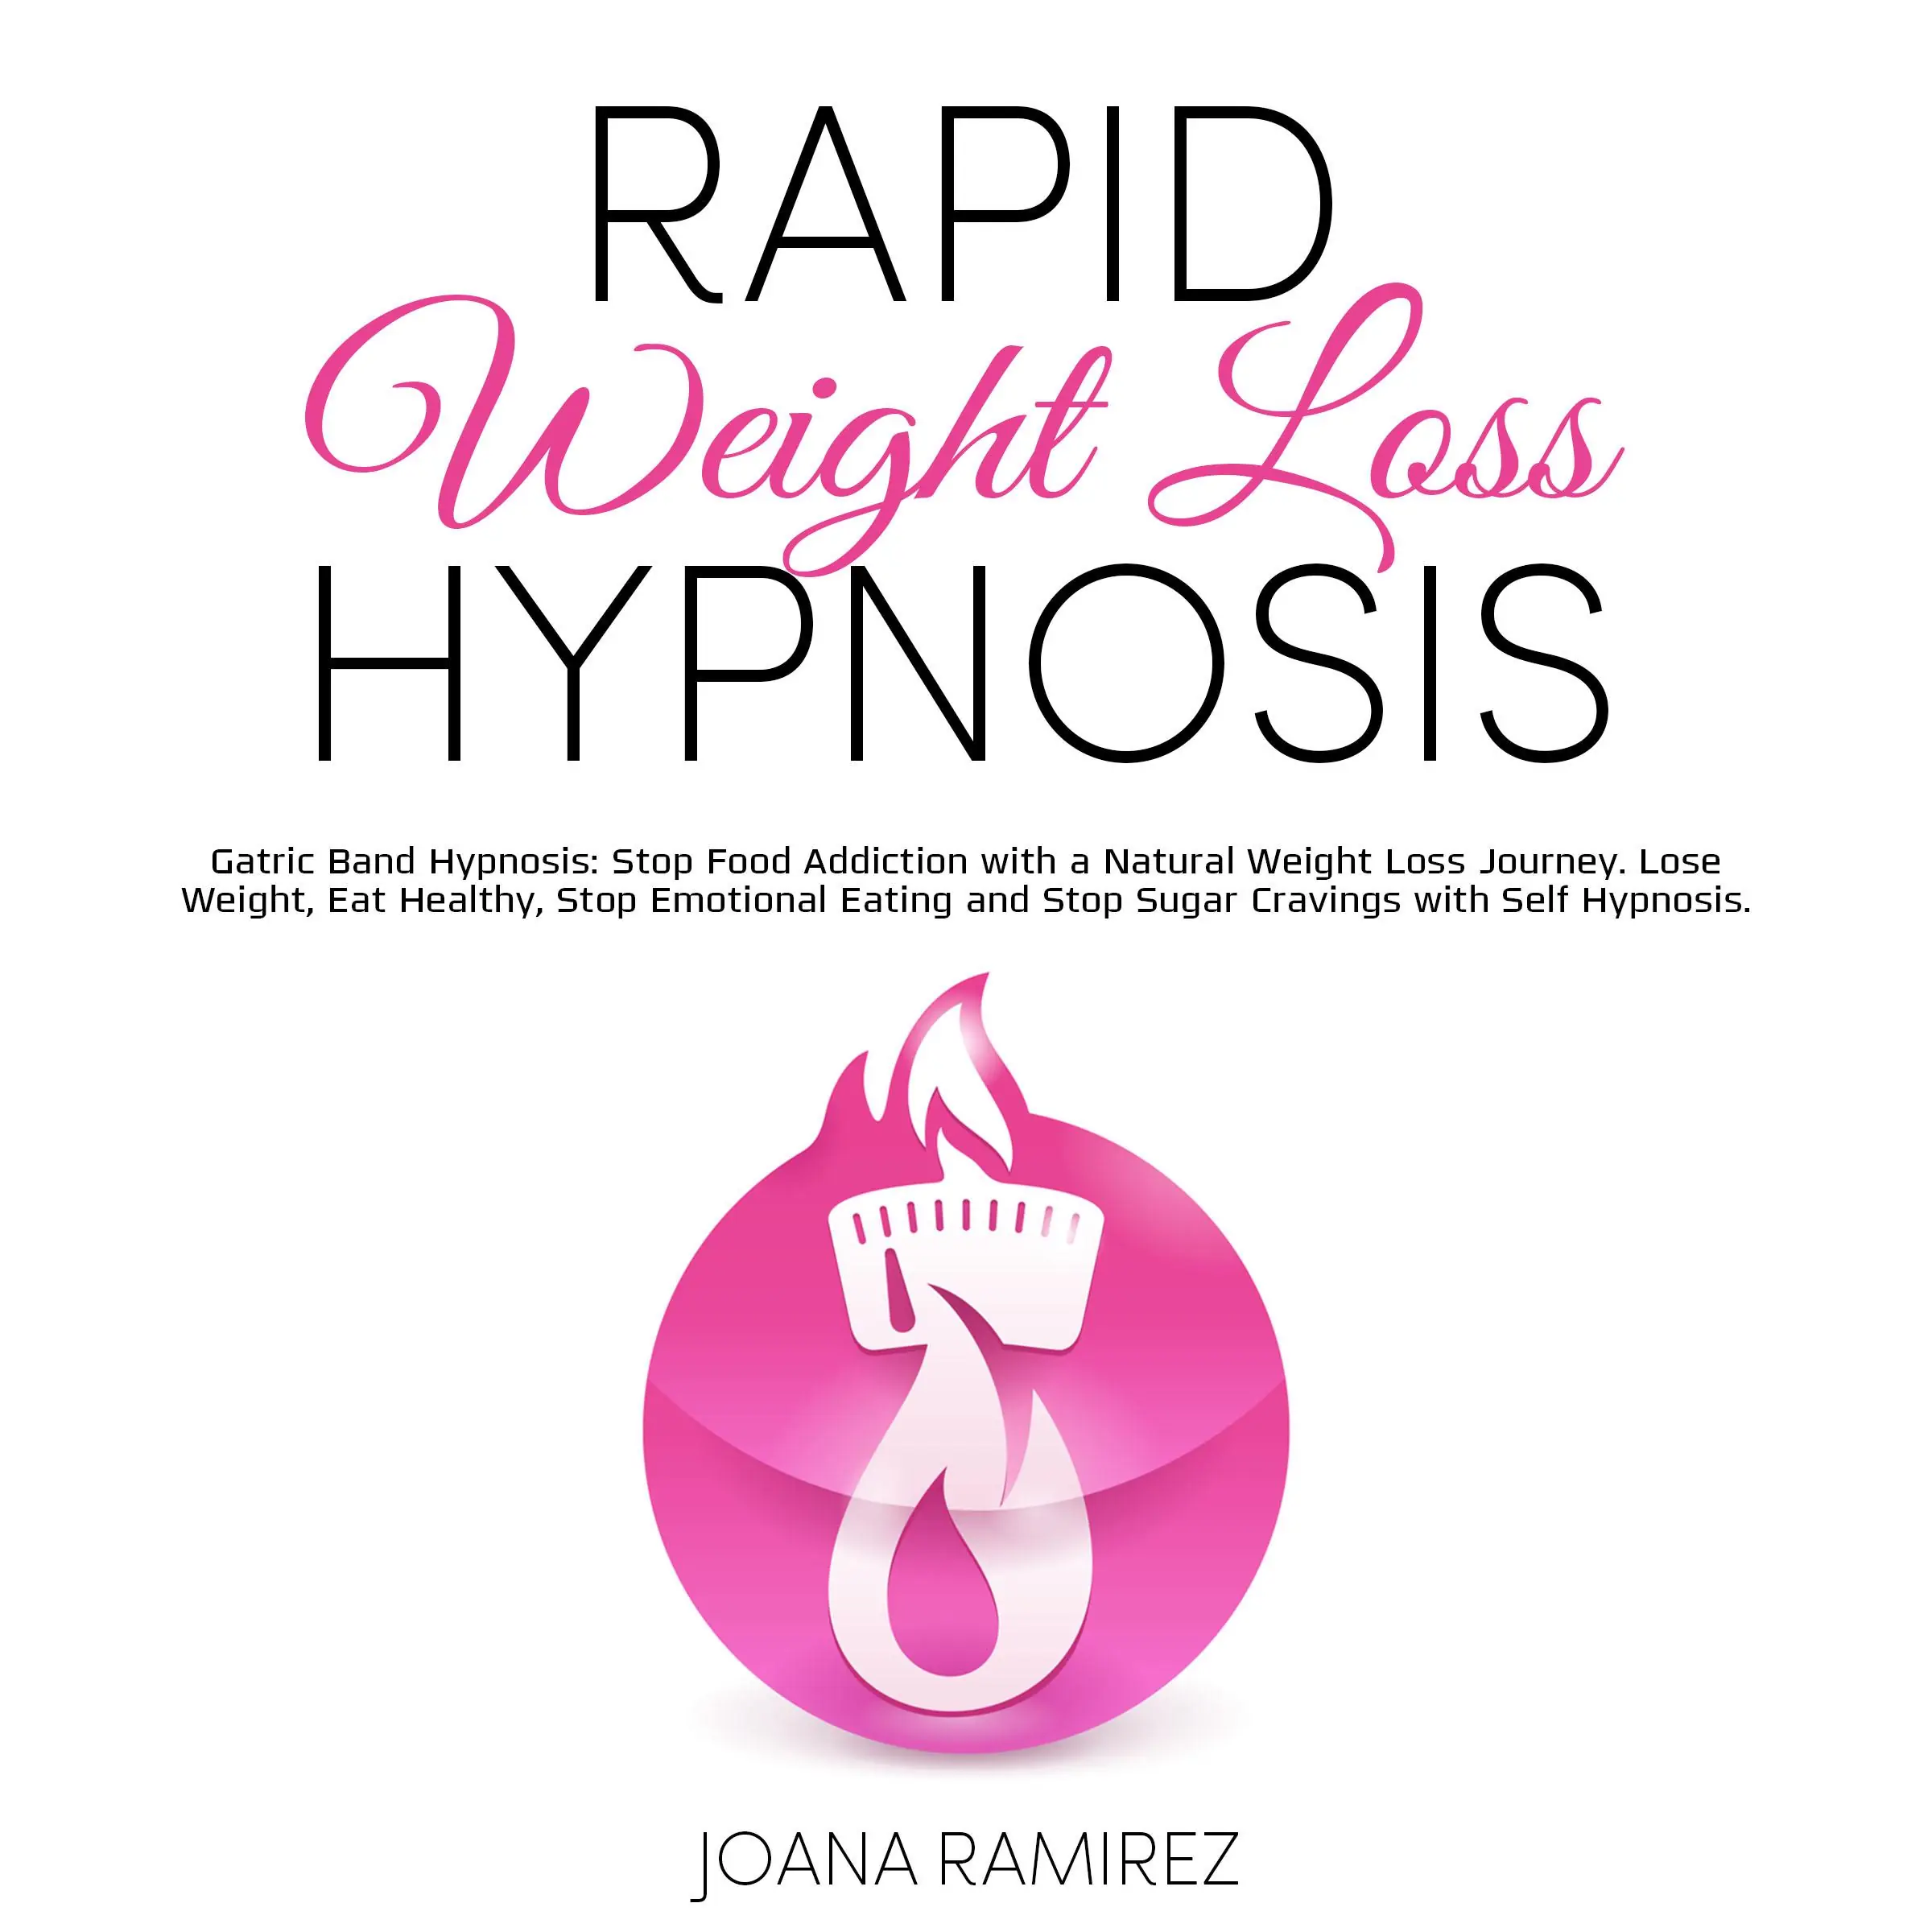 Rapid Weight Loss Hypnosis Audiobook by Joana Ramirez